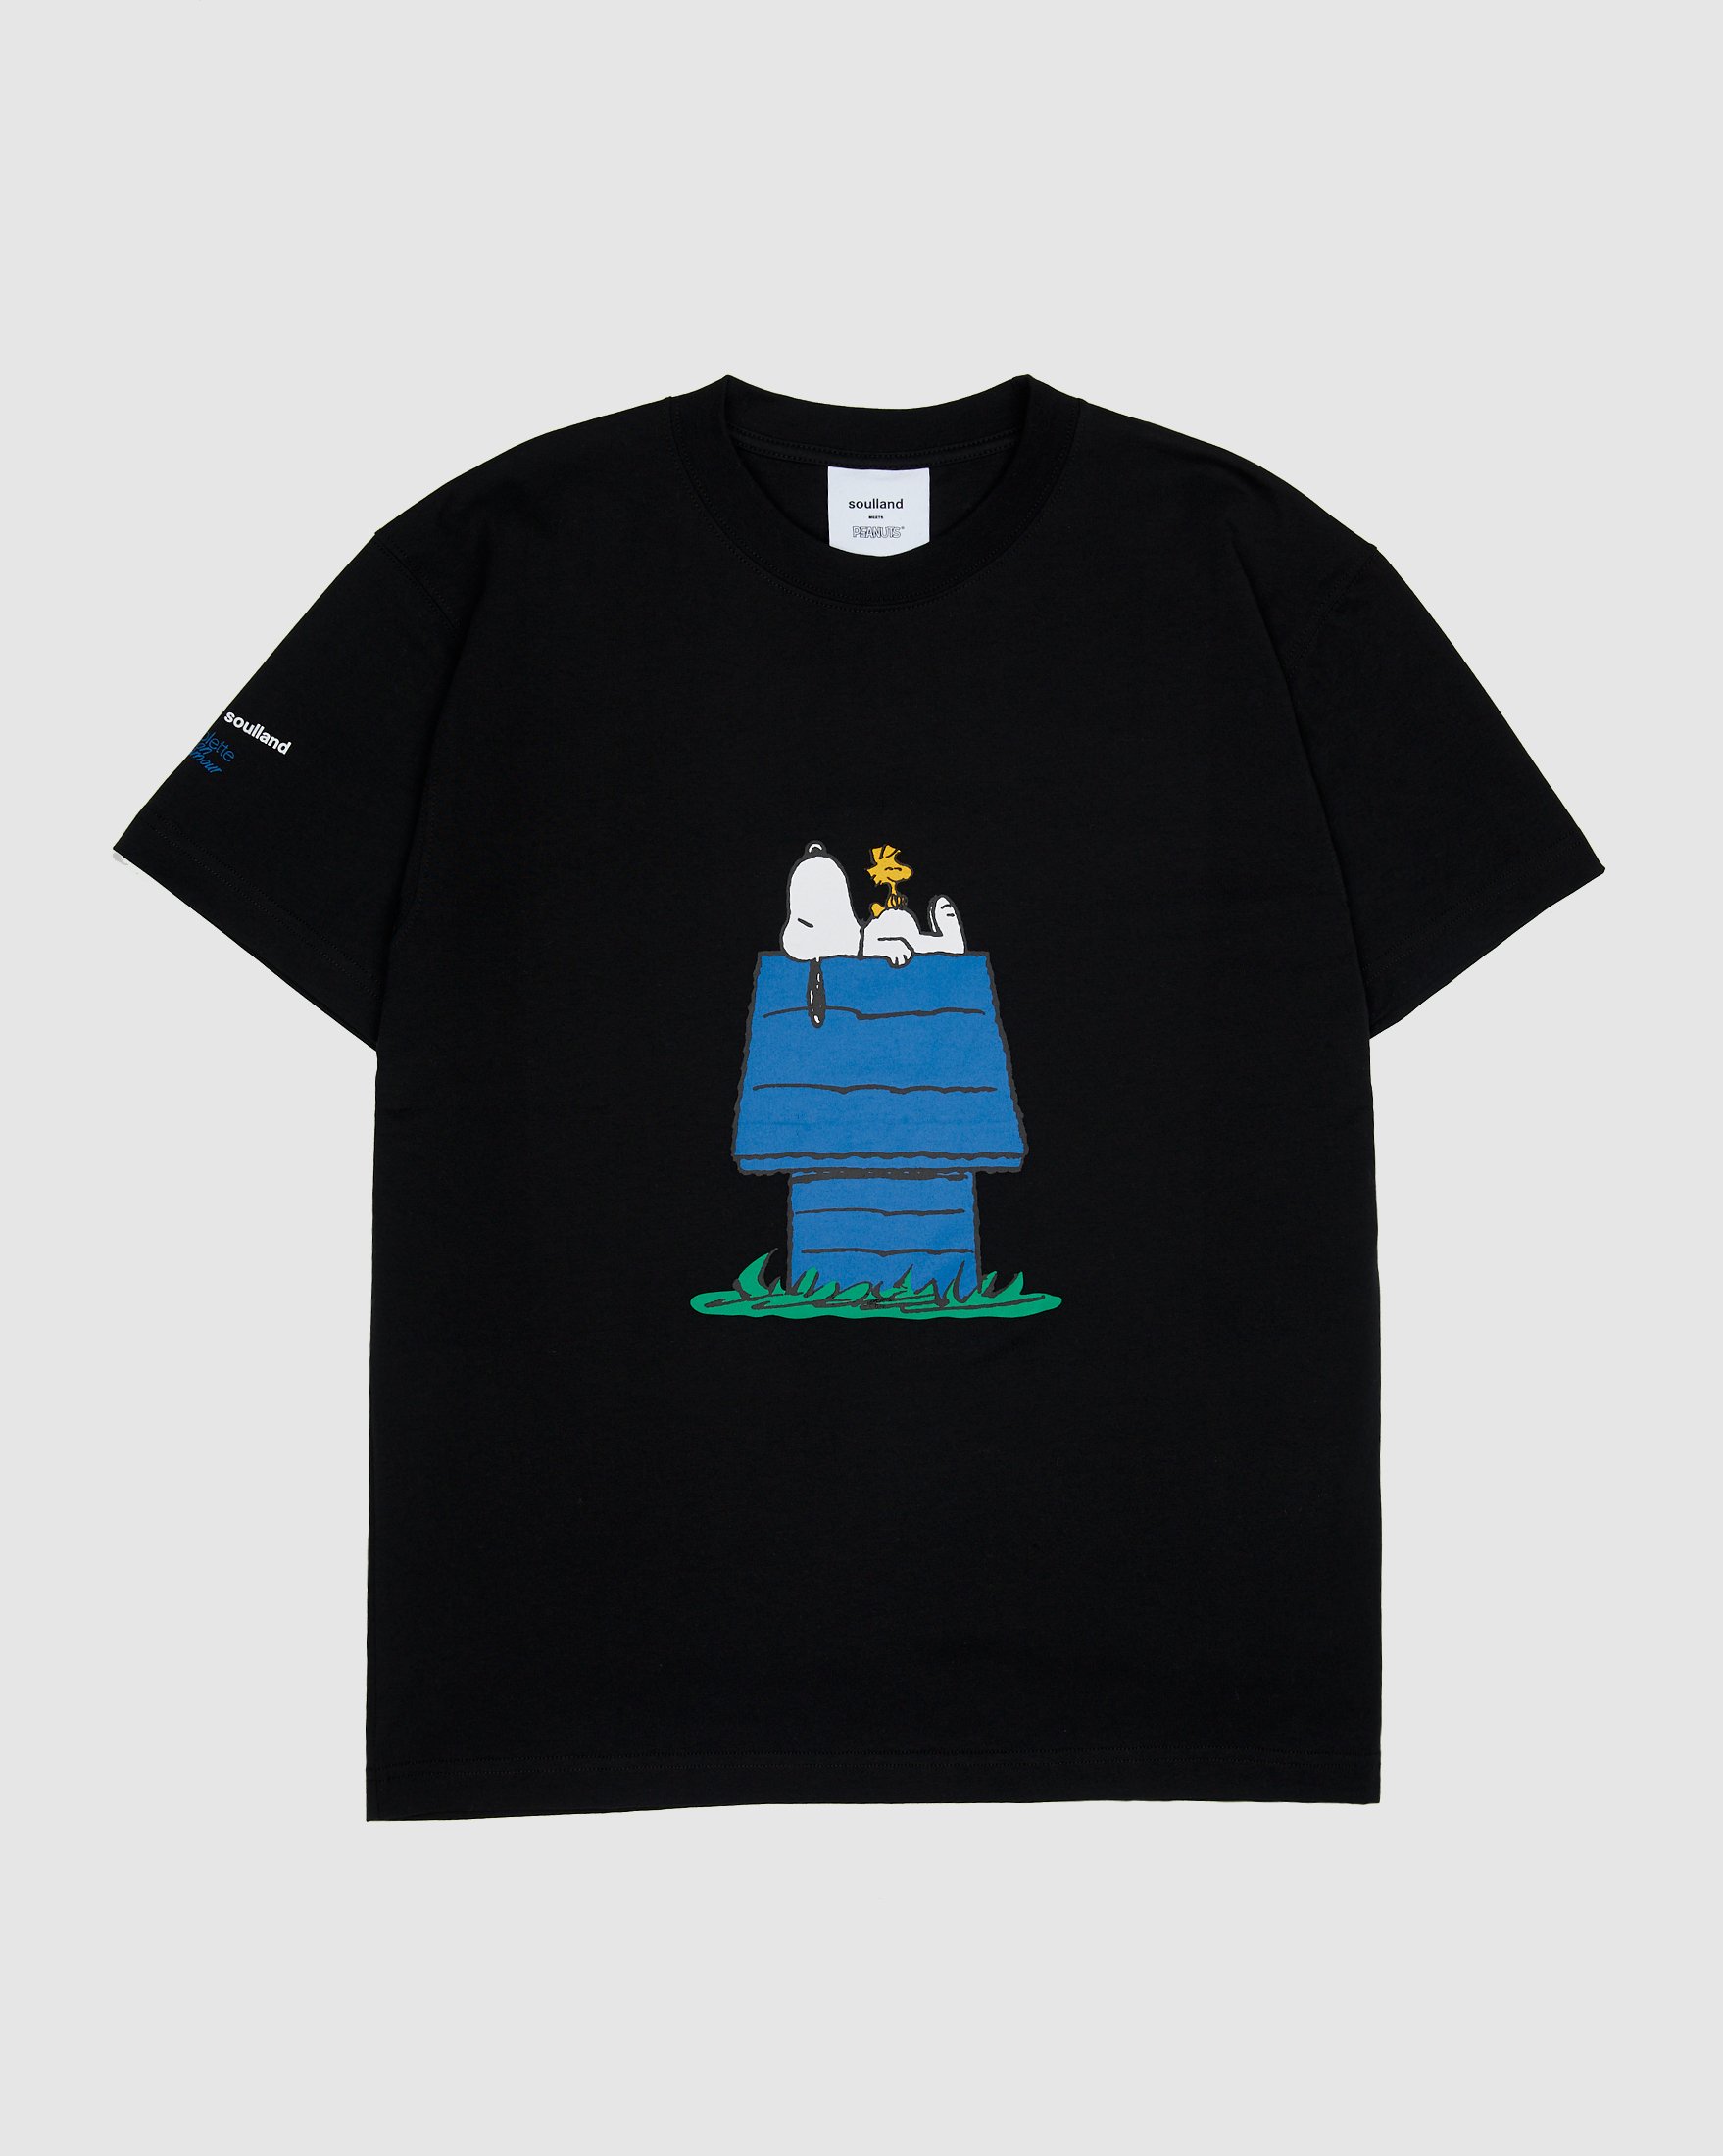 Colette Mon Amour x Soulland - Snoopy Bed Black T-Shirt - Clothing - Black - Image 1